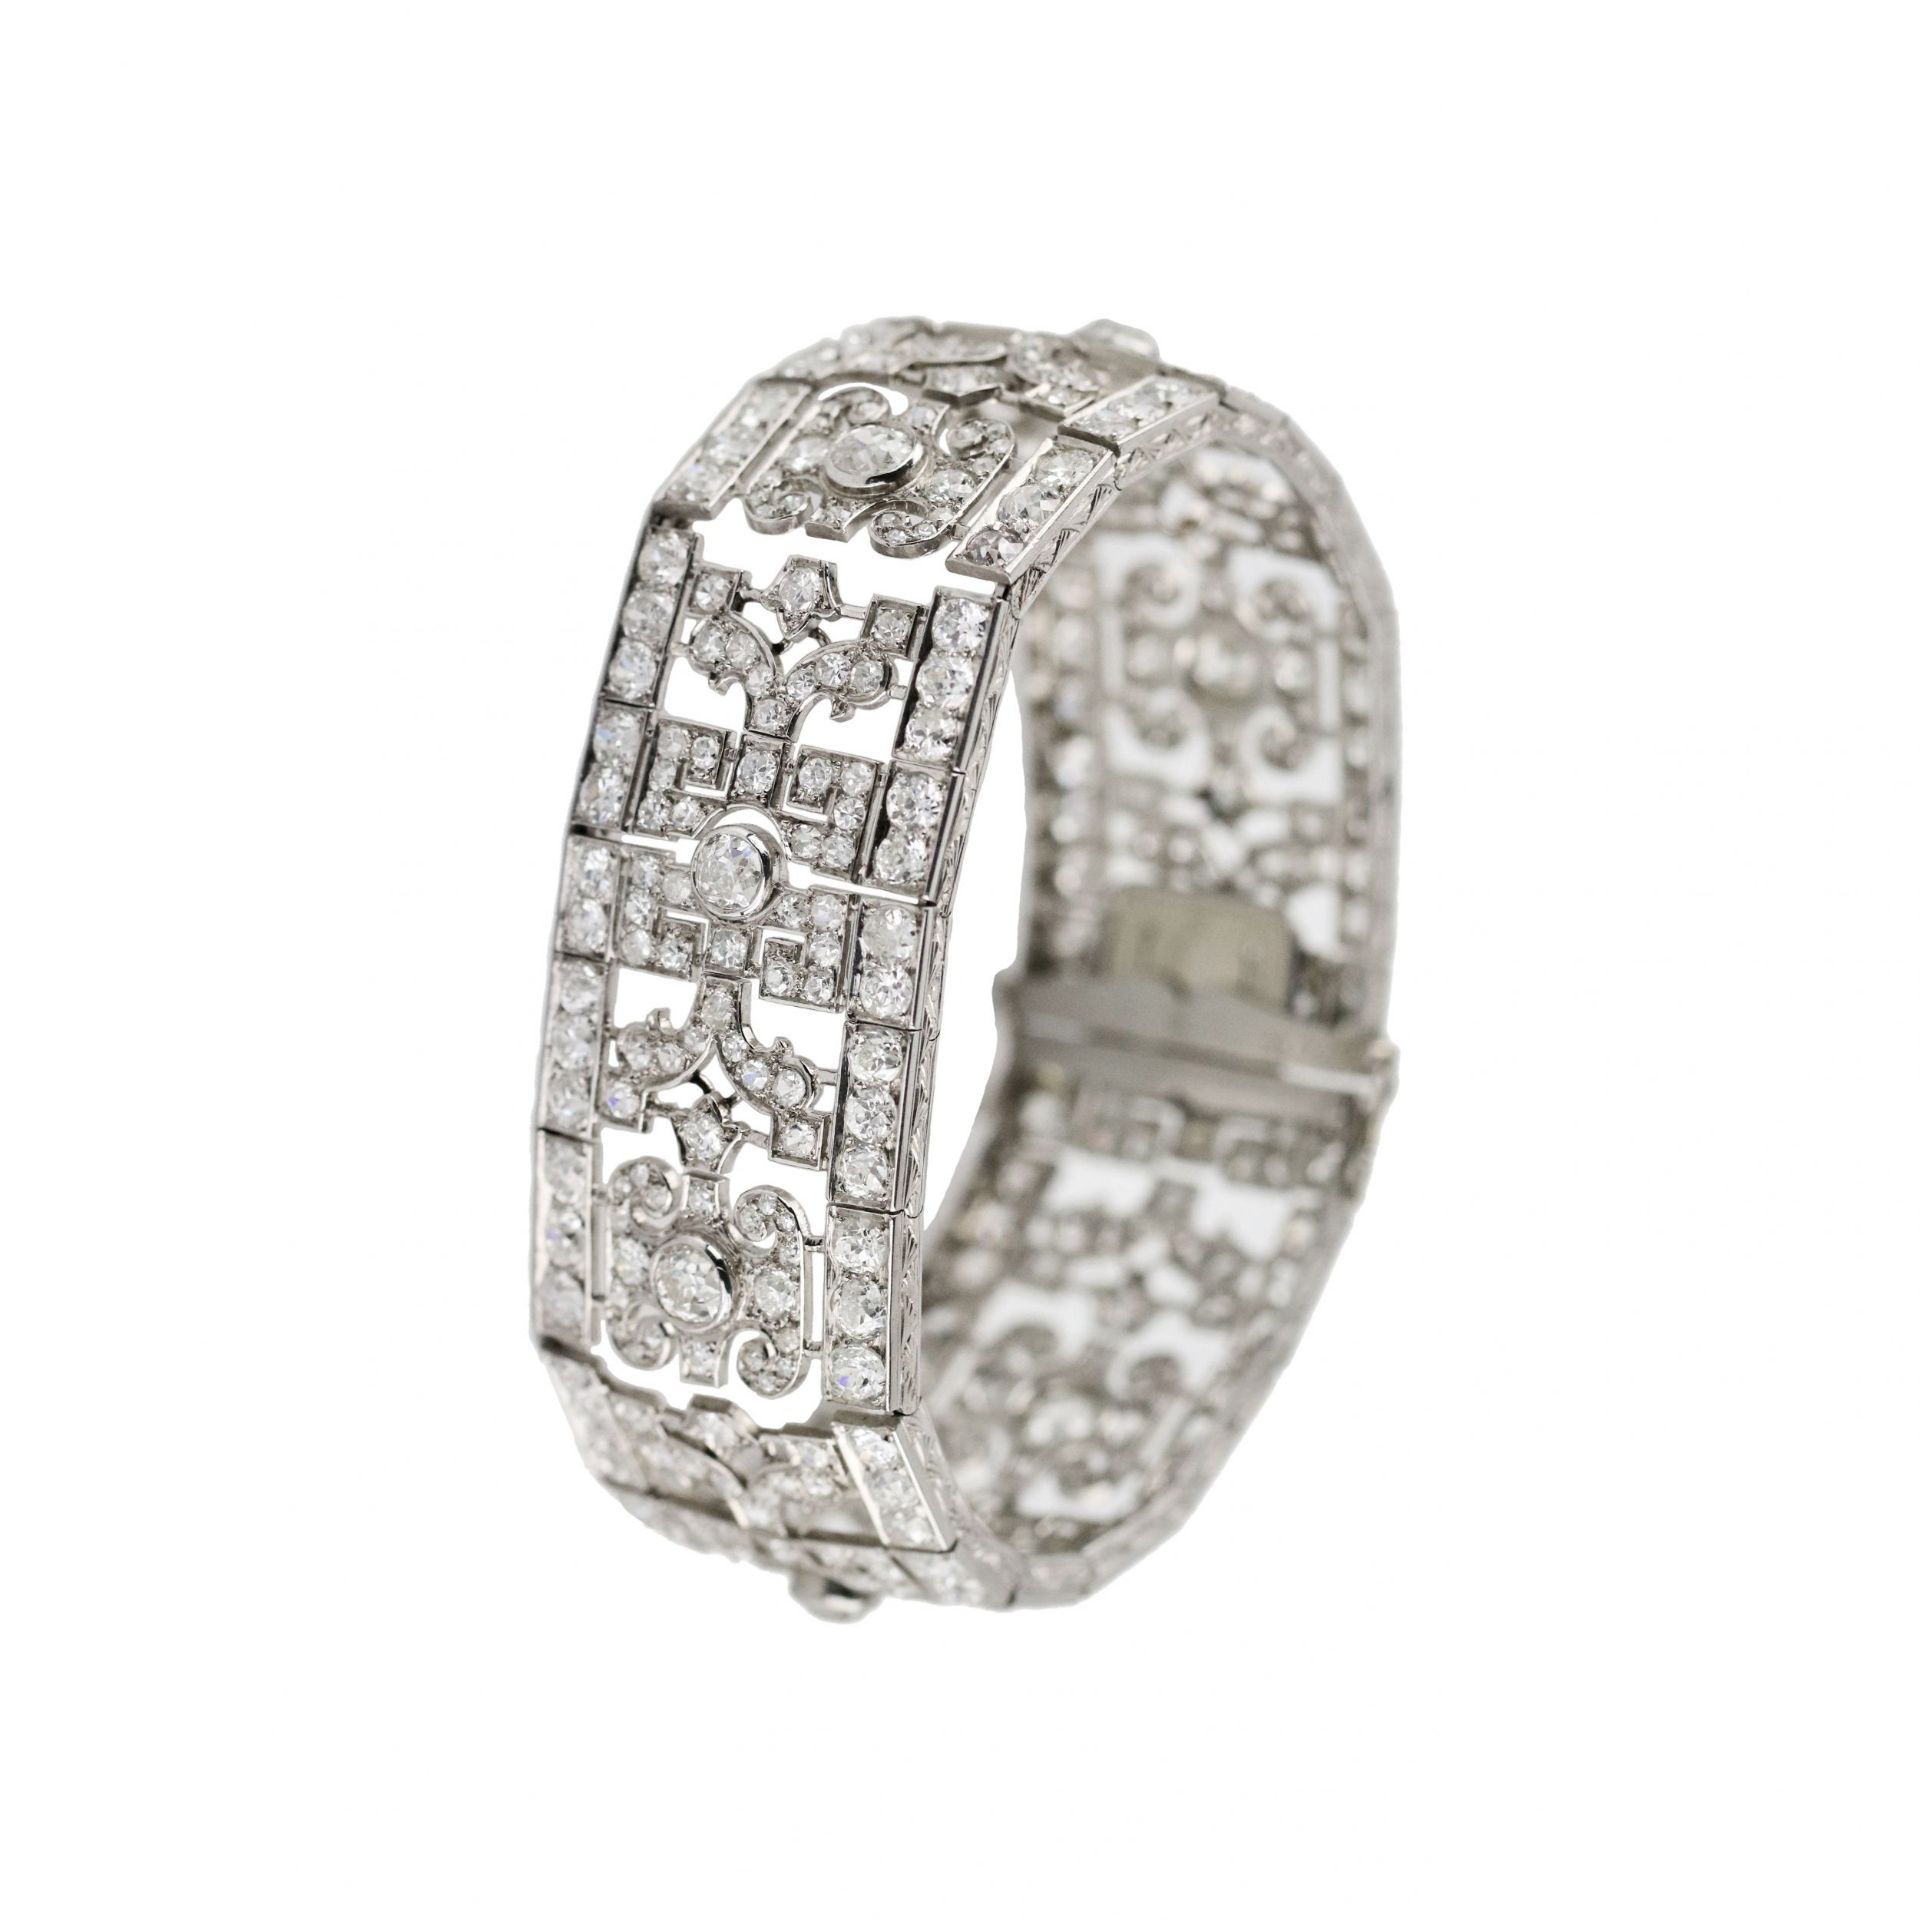 Platinum bracelet with diamonds, NARDI, Italy. In original case. - Image 3 of 9